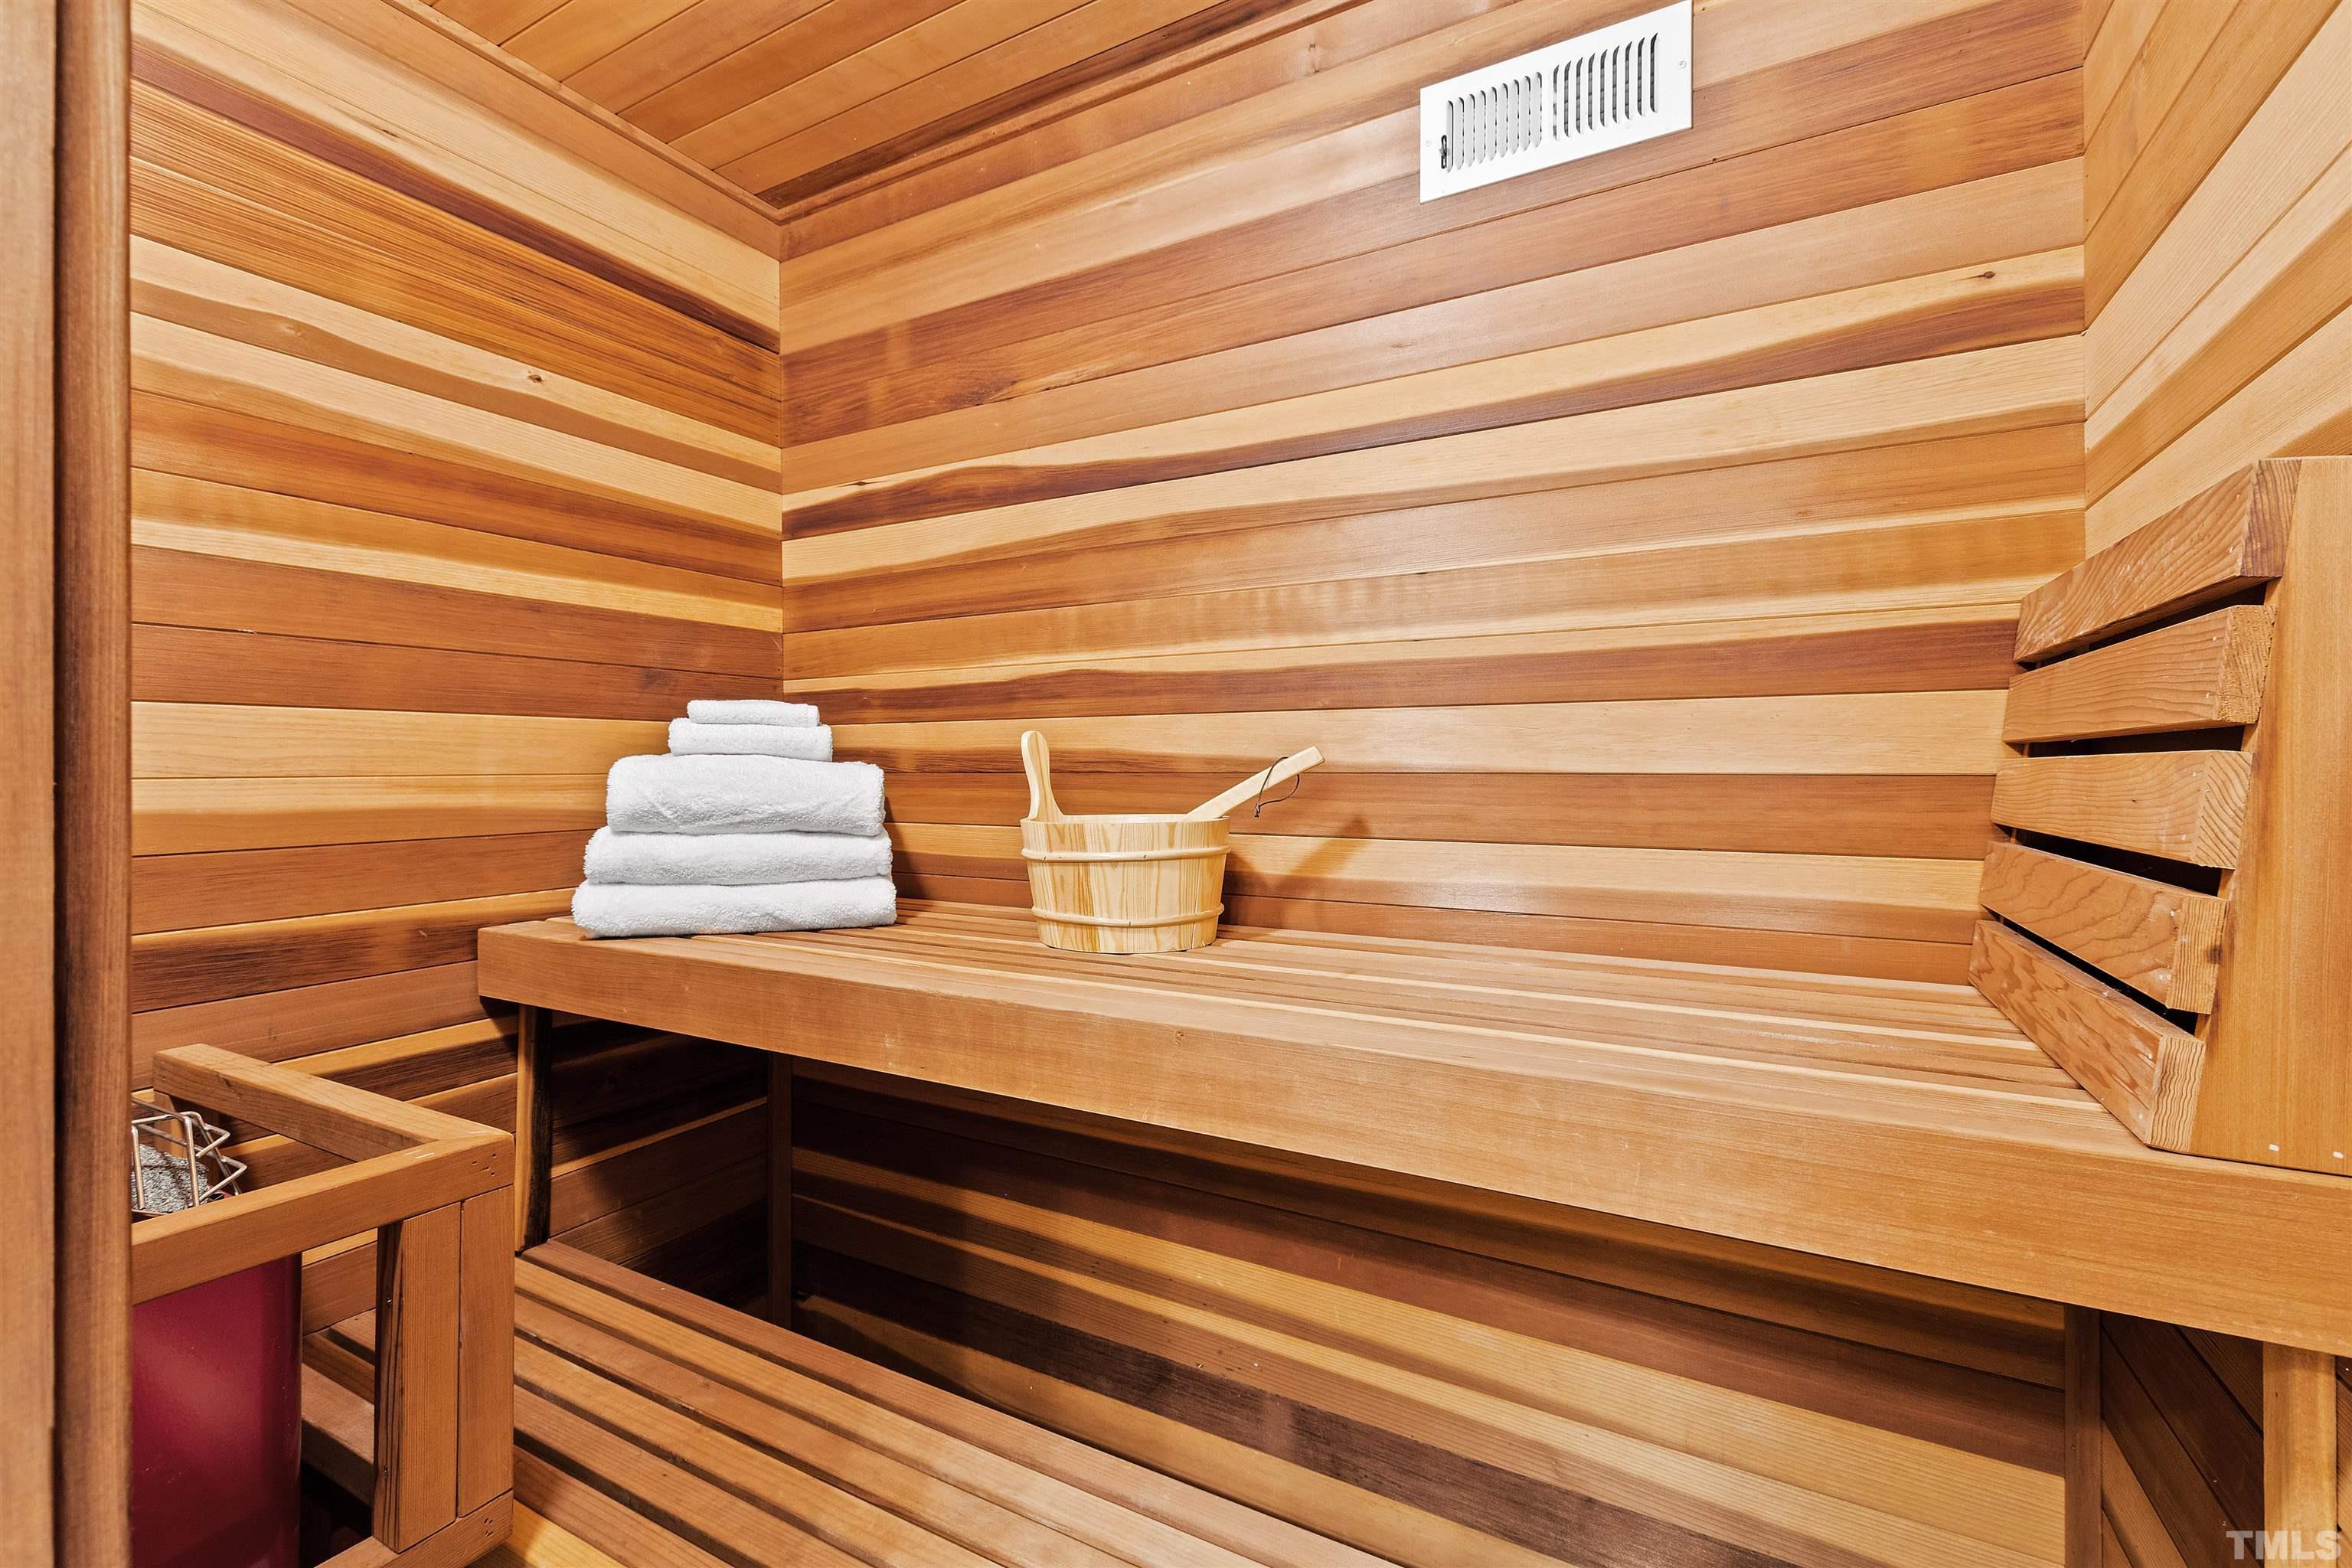 Bathroom includes a full sauna!